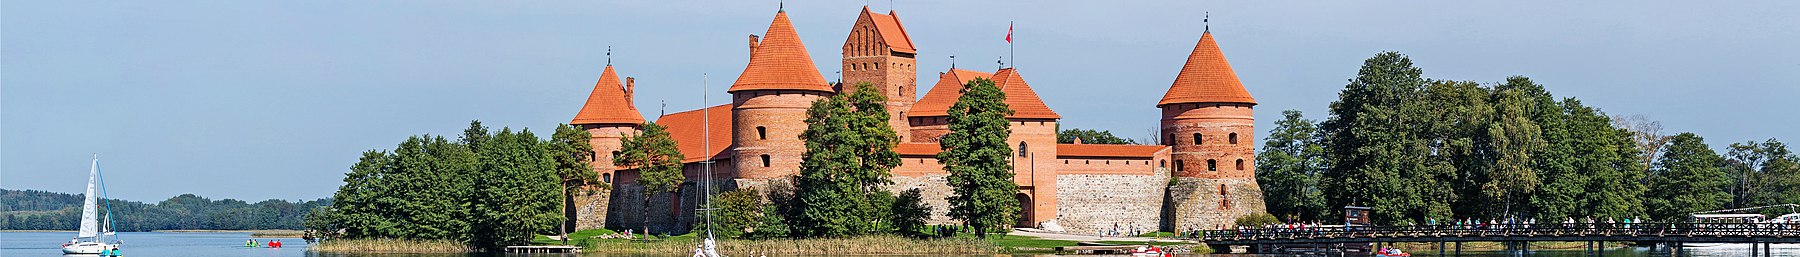 Trakai Island Castle, Lithuania - Diliff banner.jpg